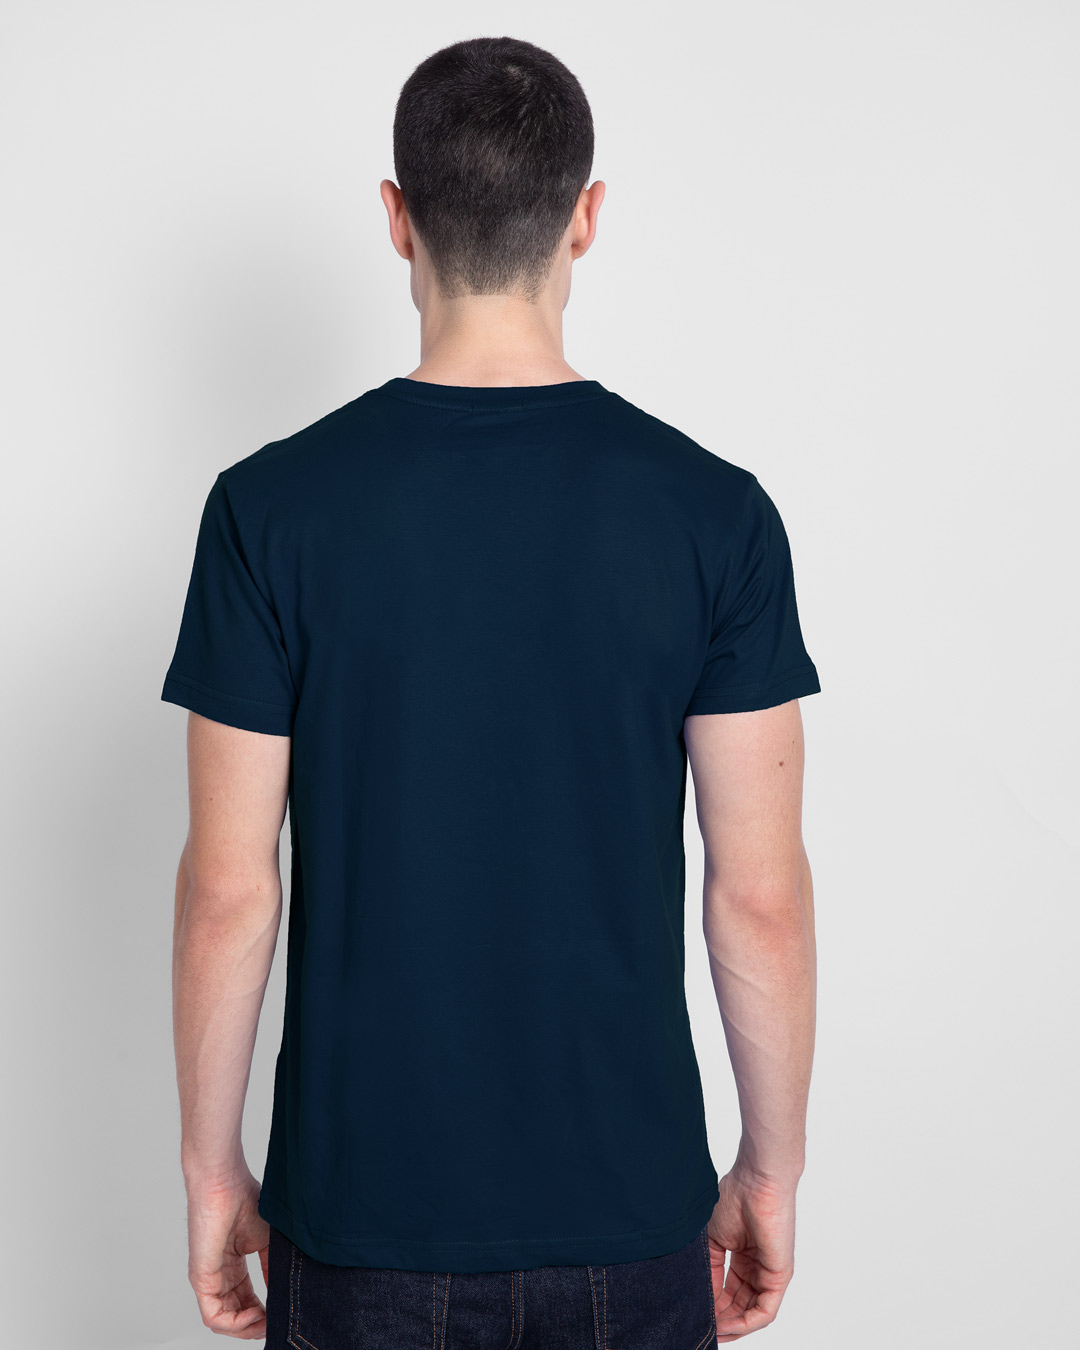 Shop Caution Safe Distance Half Sleeve T-Shirt Navy Blue-Back